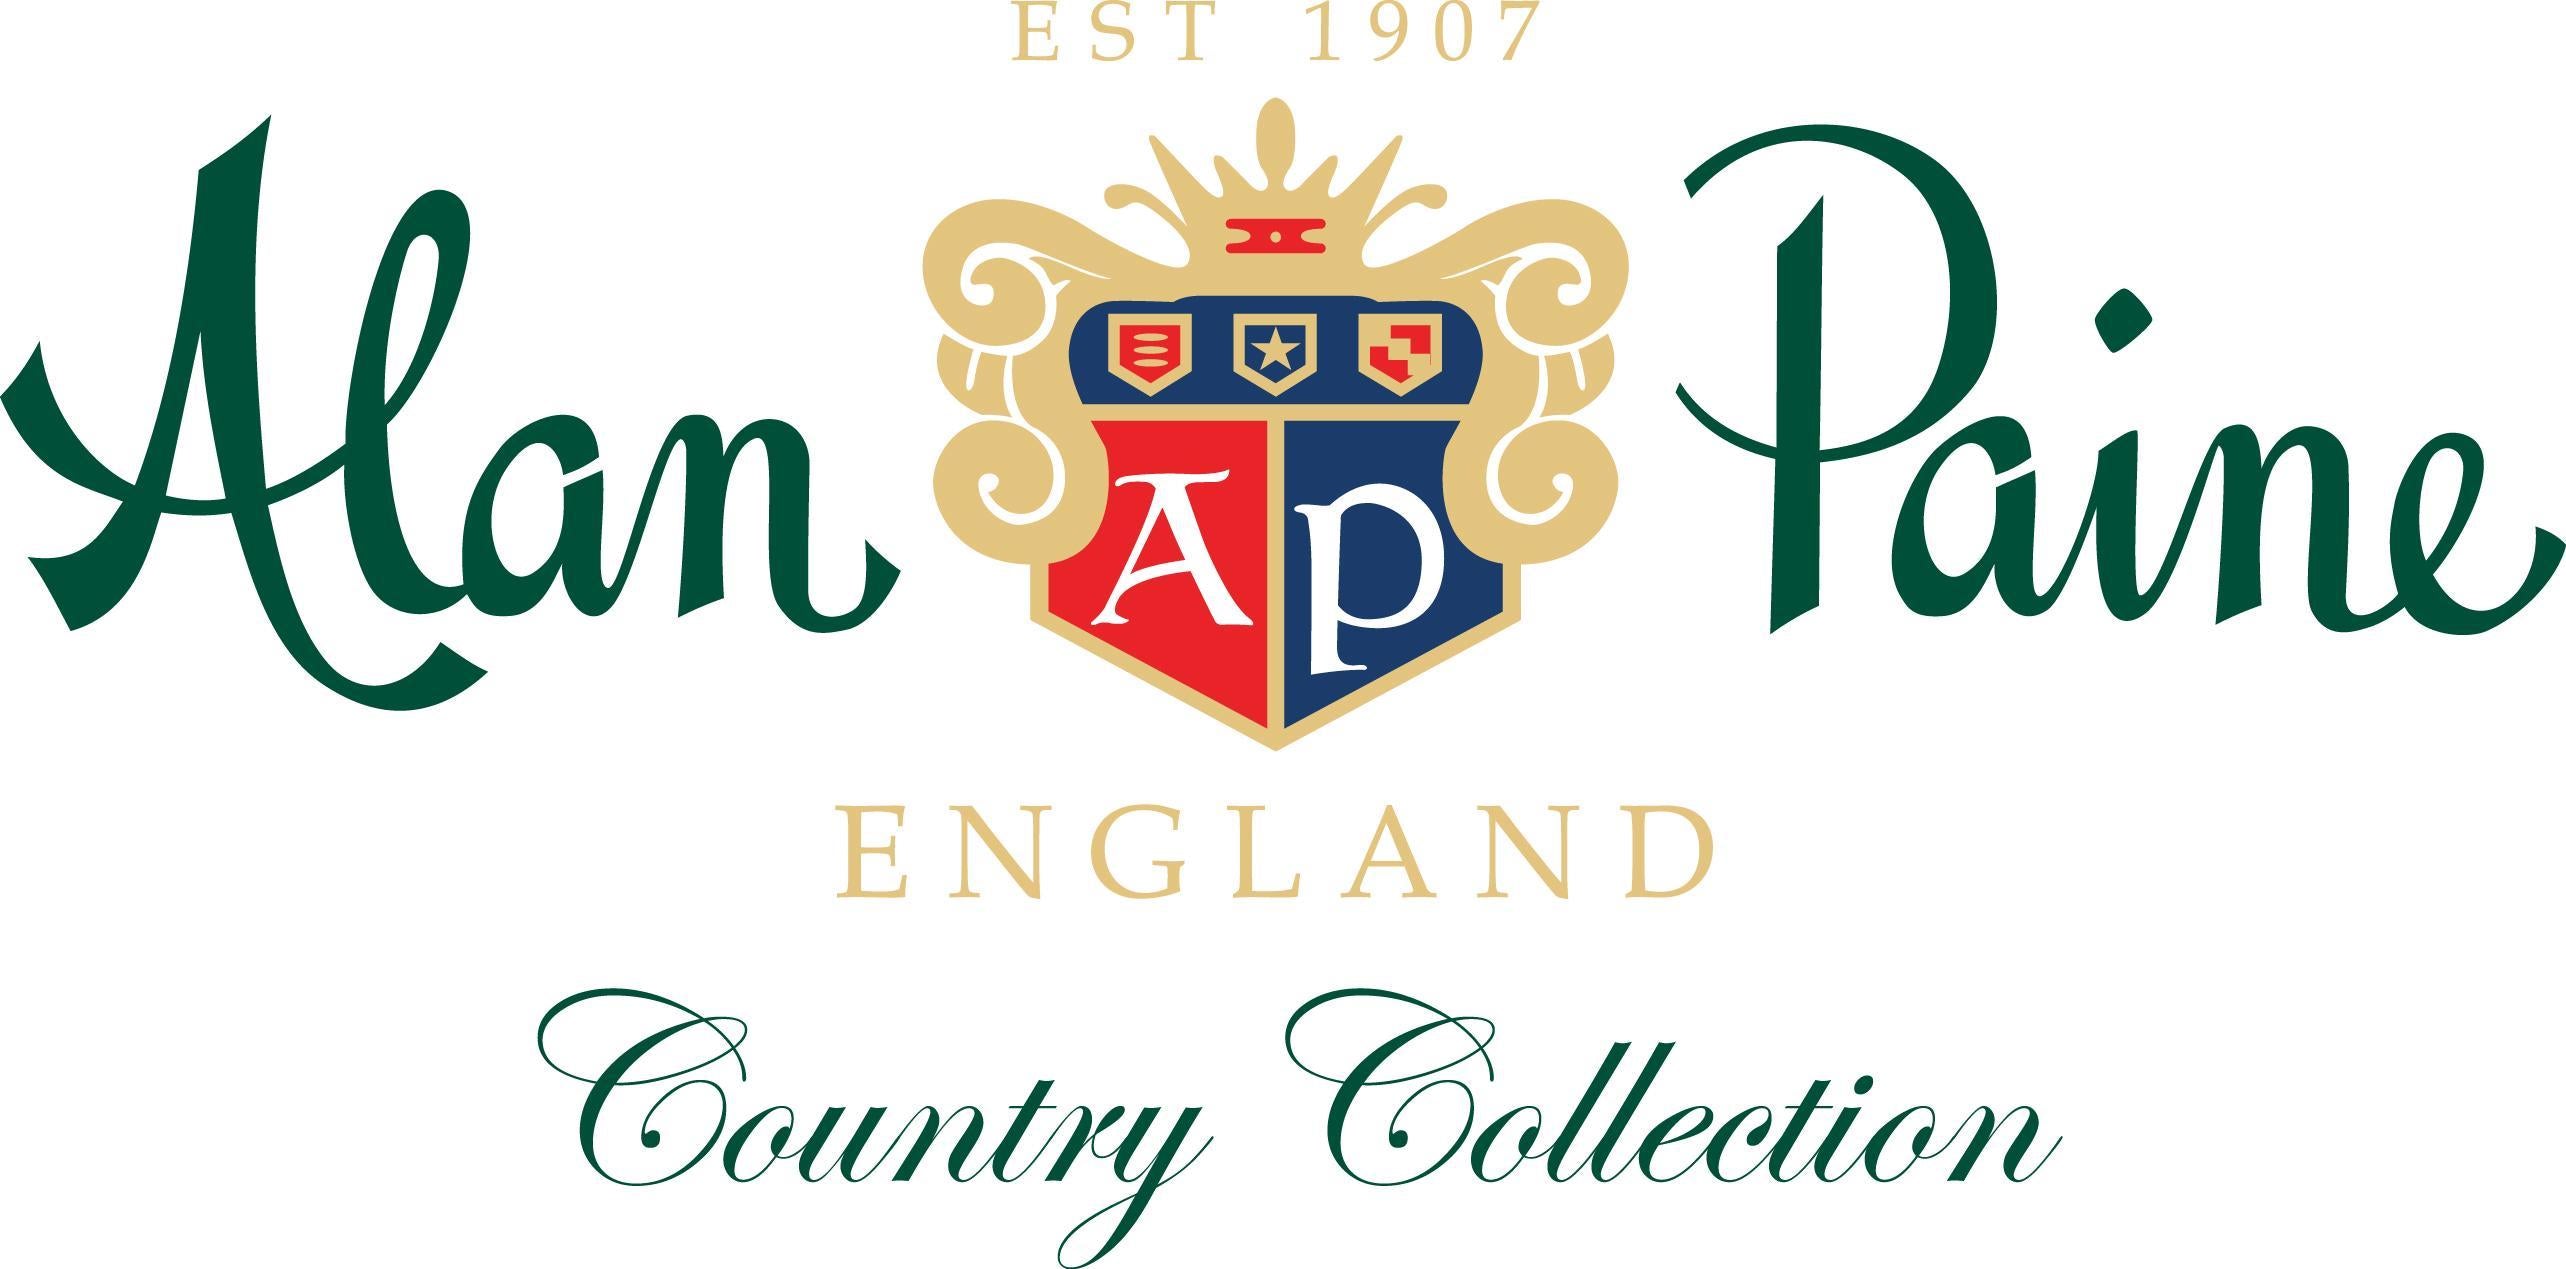 Alan Paine Logo